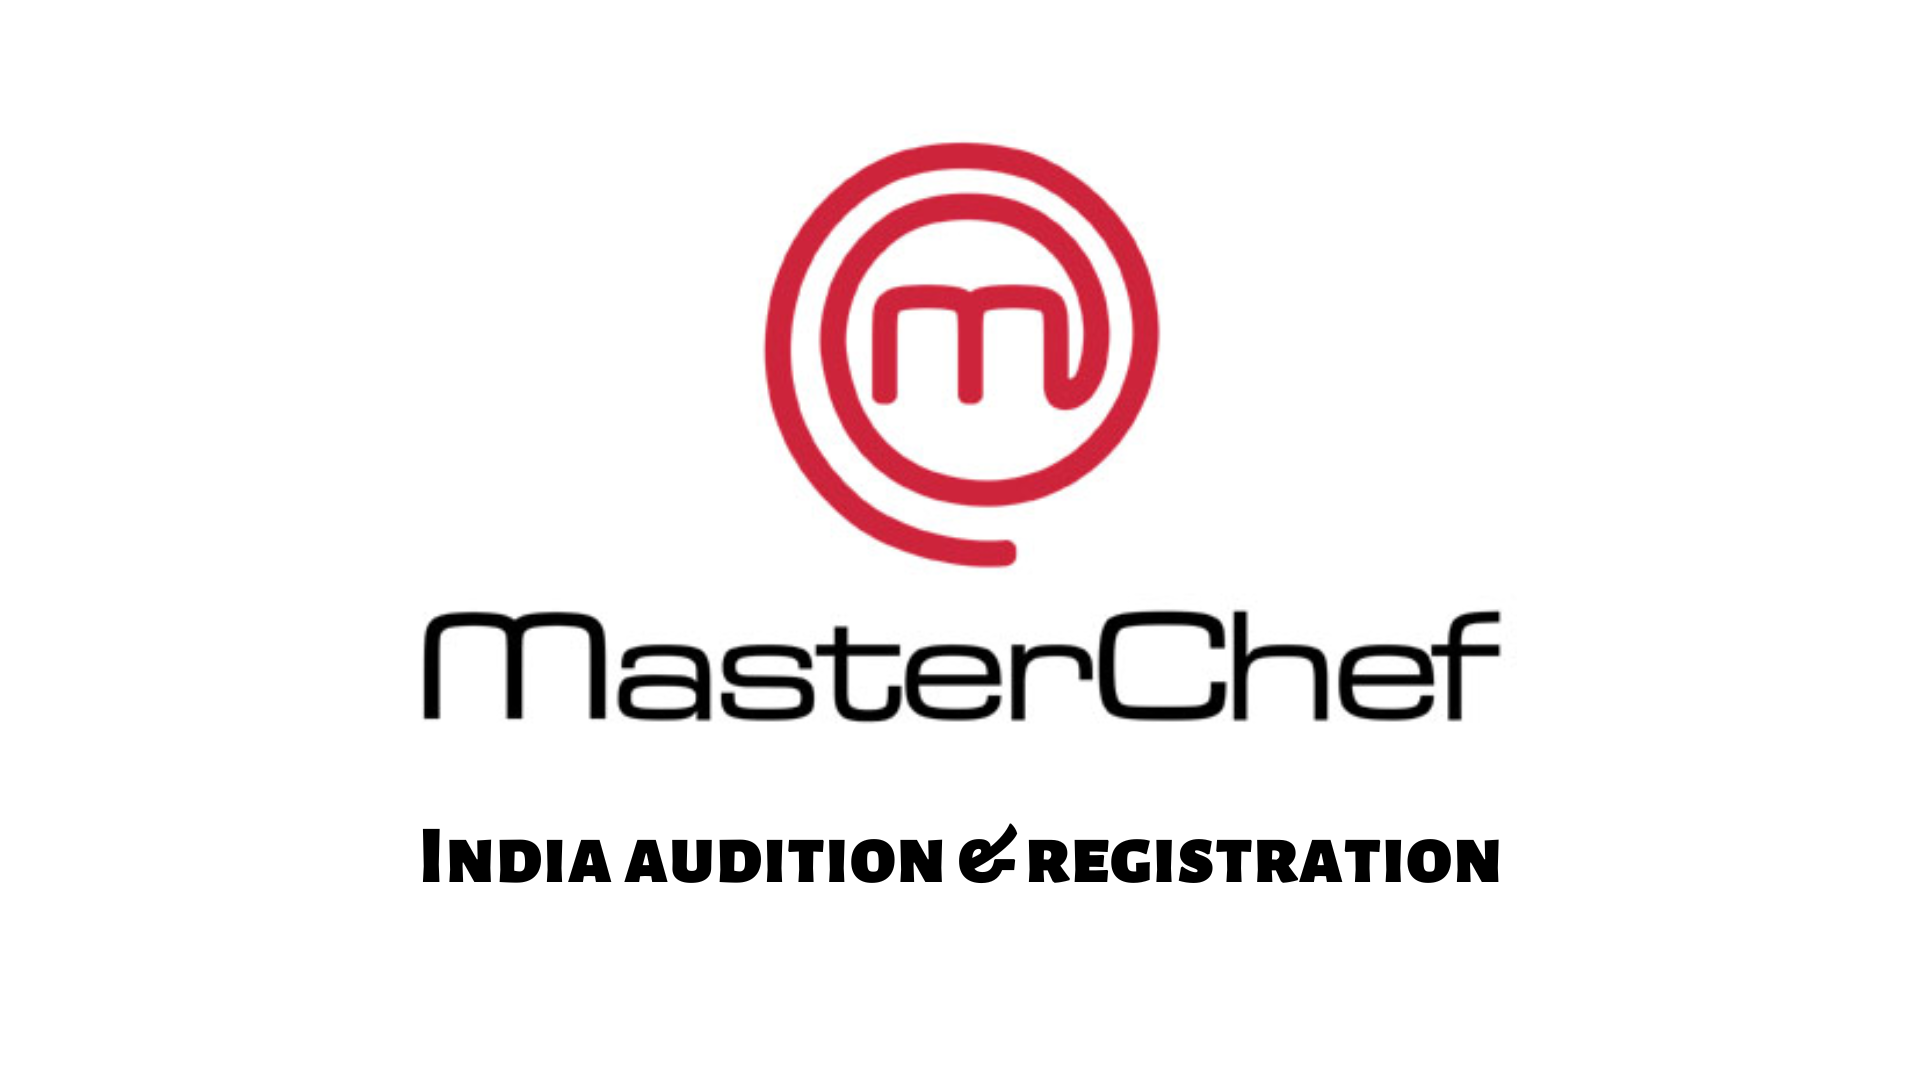 Register for Masterchef India